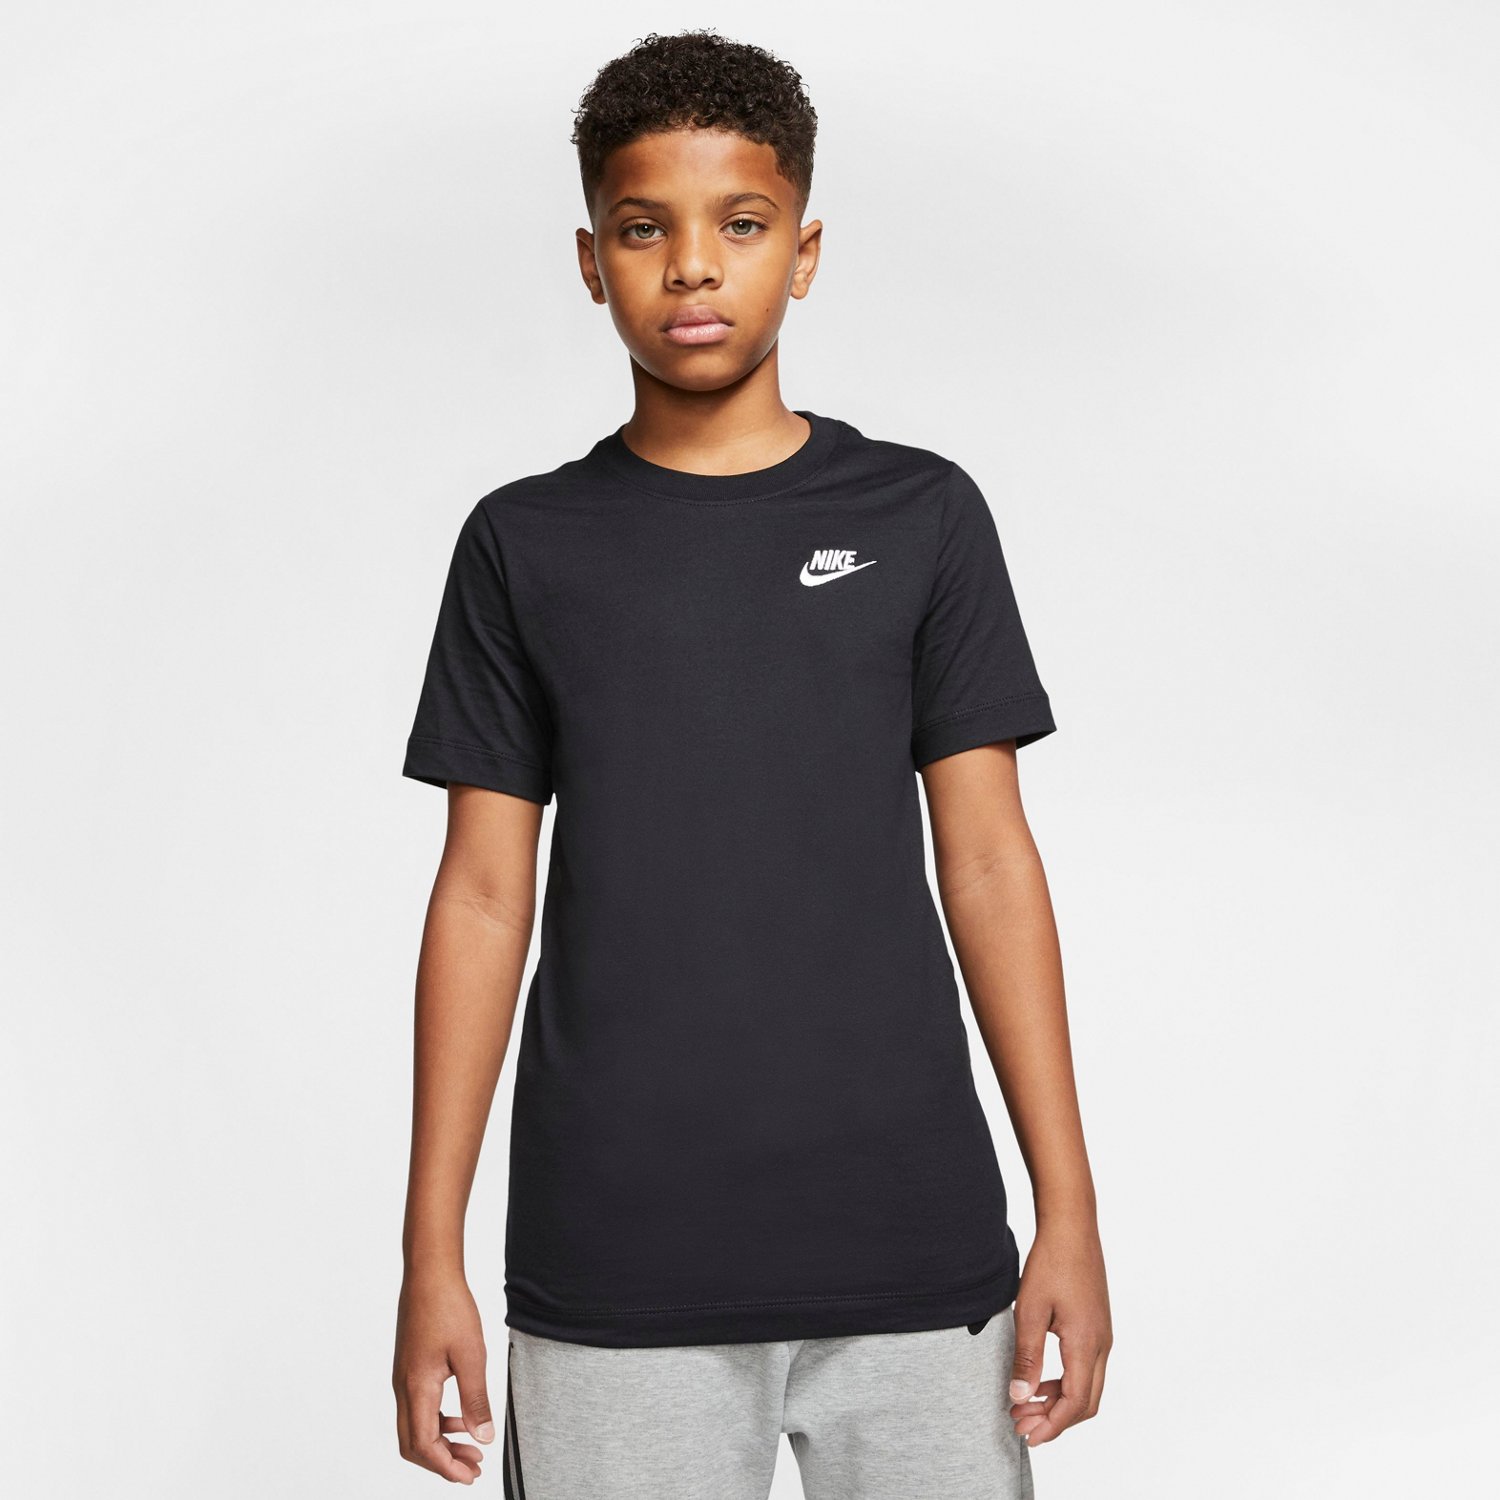 Nike Multi Futura T-shirt in white